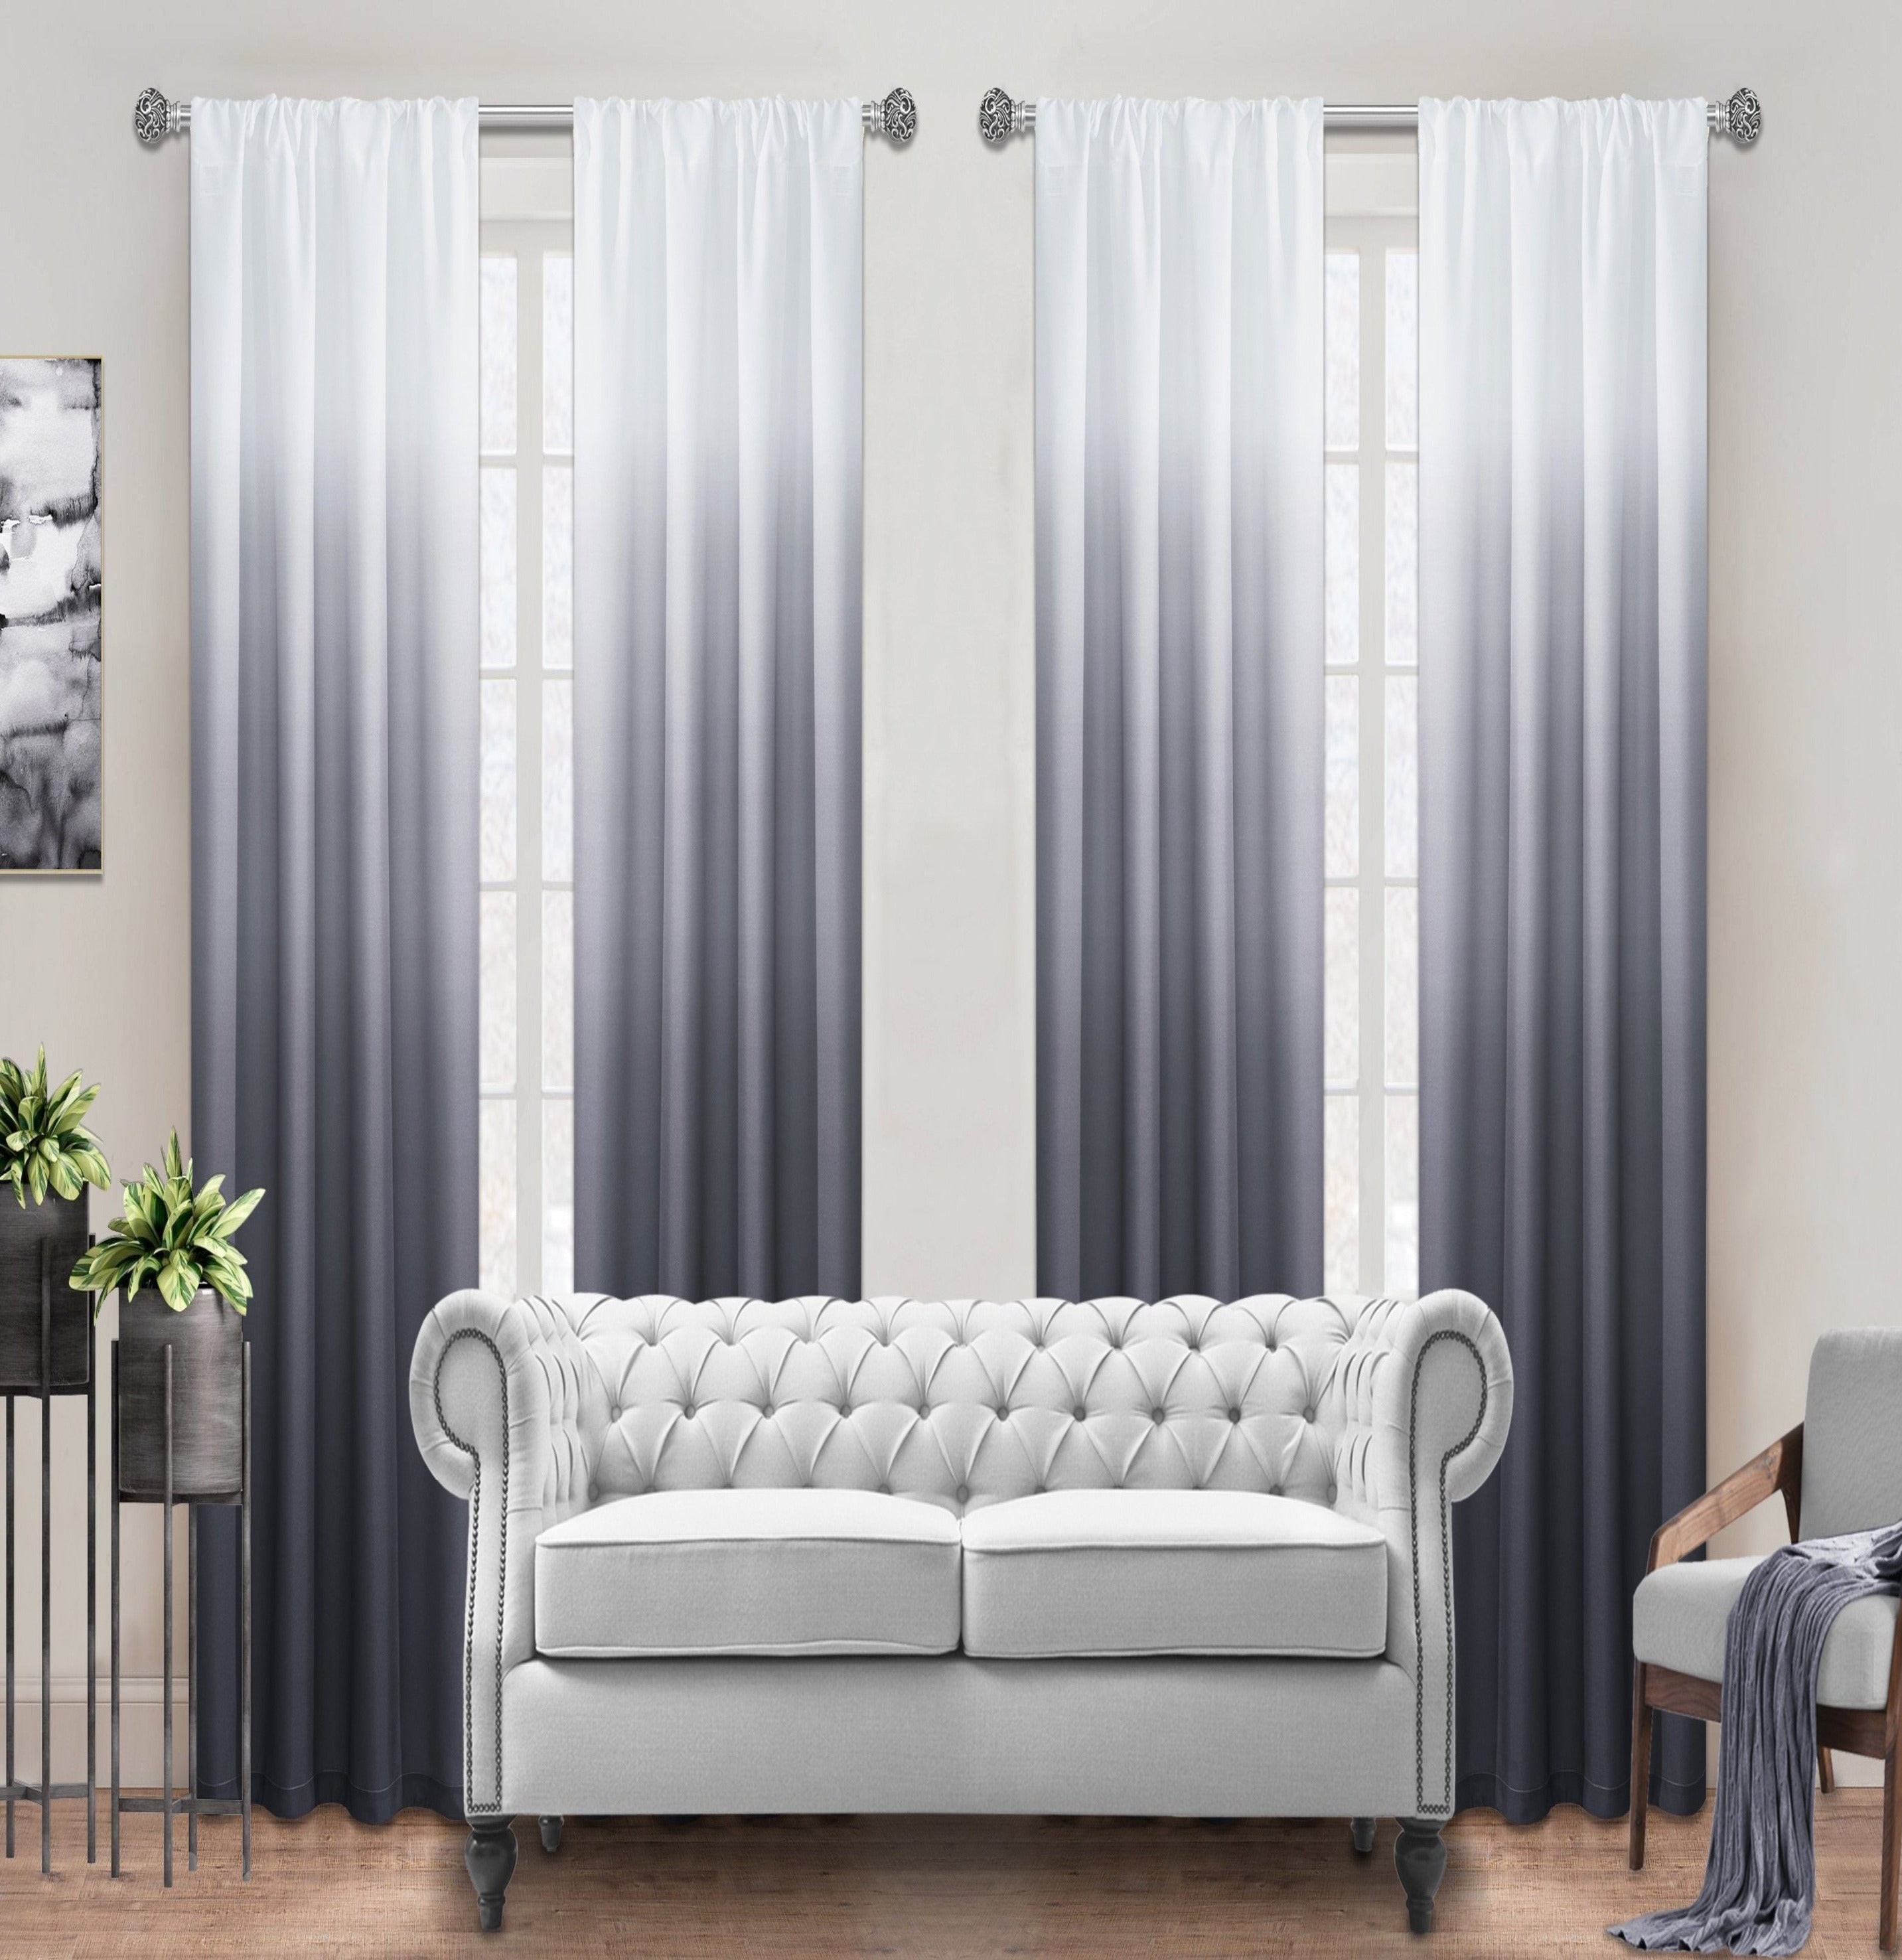 Dainty Home Shades Gradient Ombre Design Heavy Room Darkening Rod Pocket Set Of 4 Window Panels